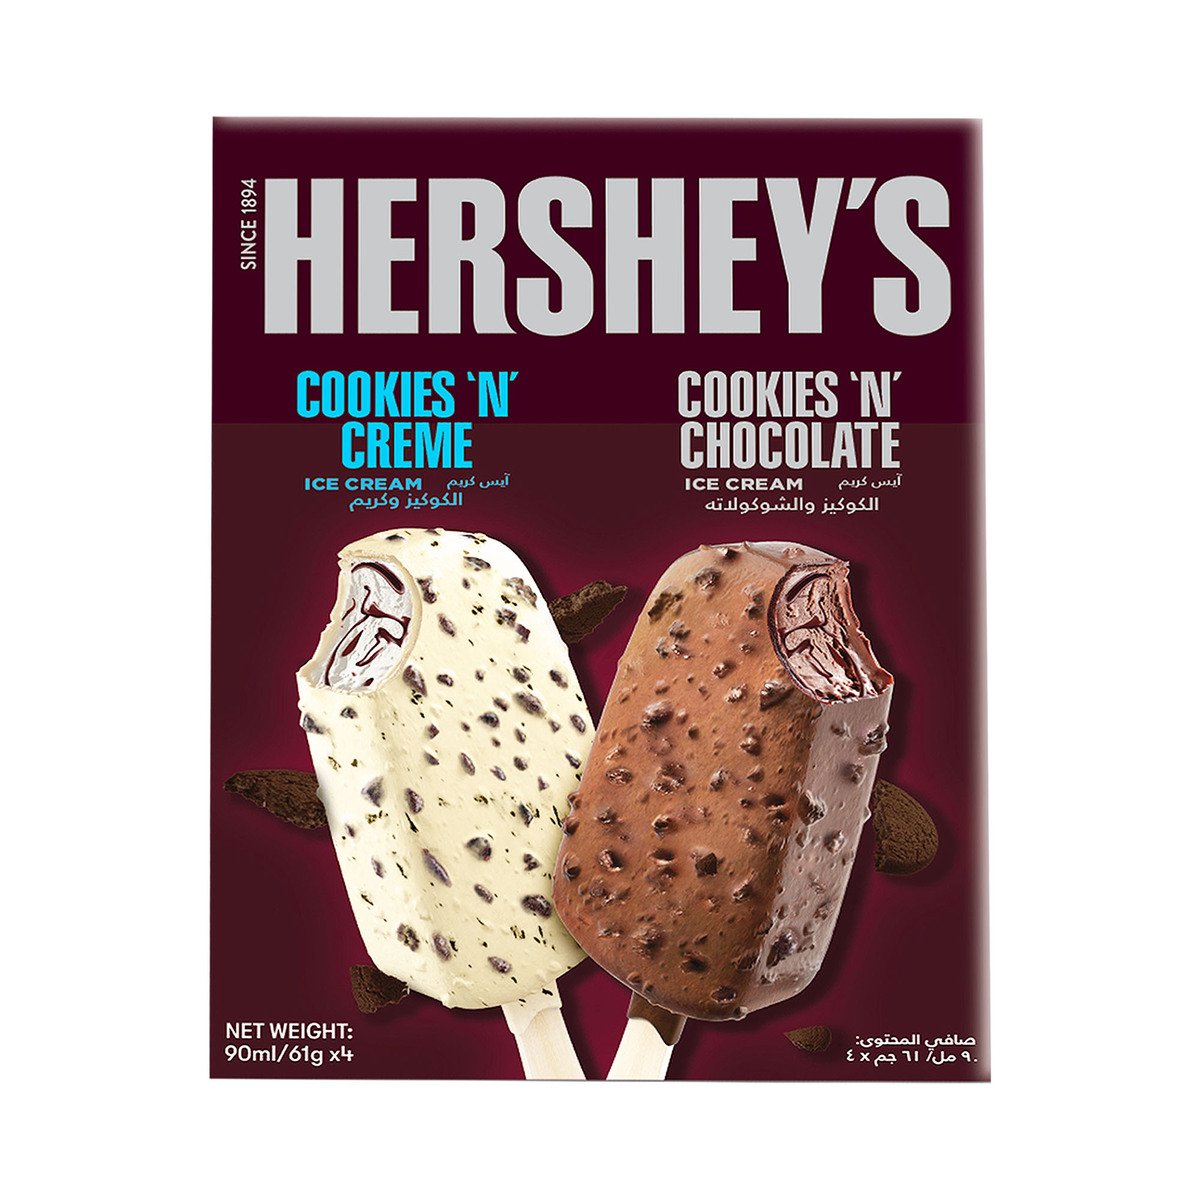 Hershey's Cookies 'N' Chocolate, Cookies 'N' Creme Ice Cream Stick 4 x 90 ml